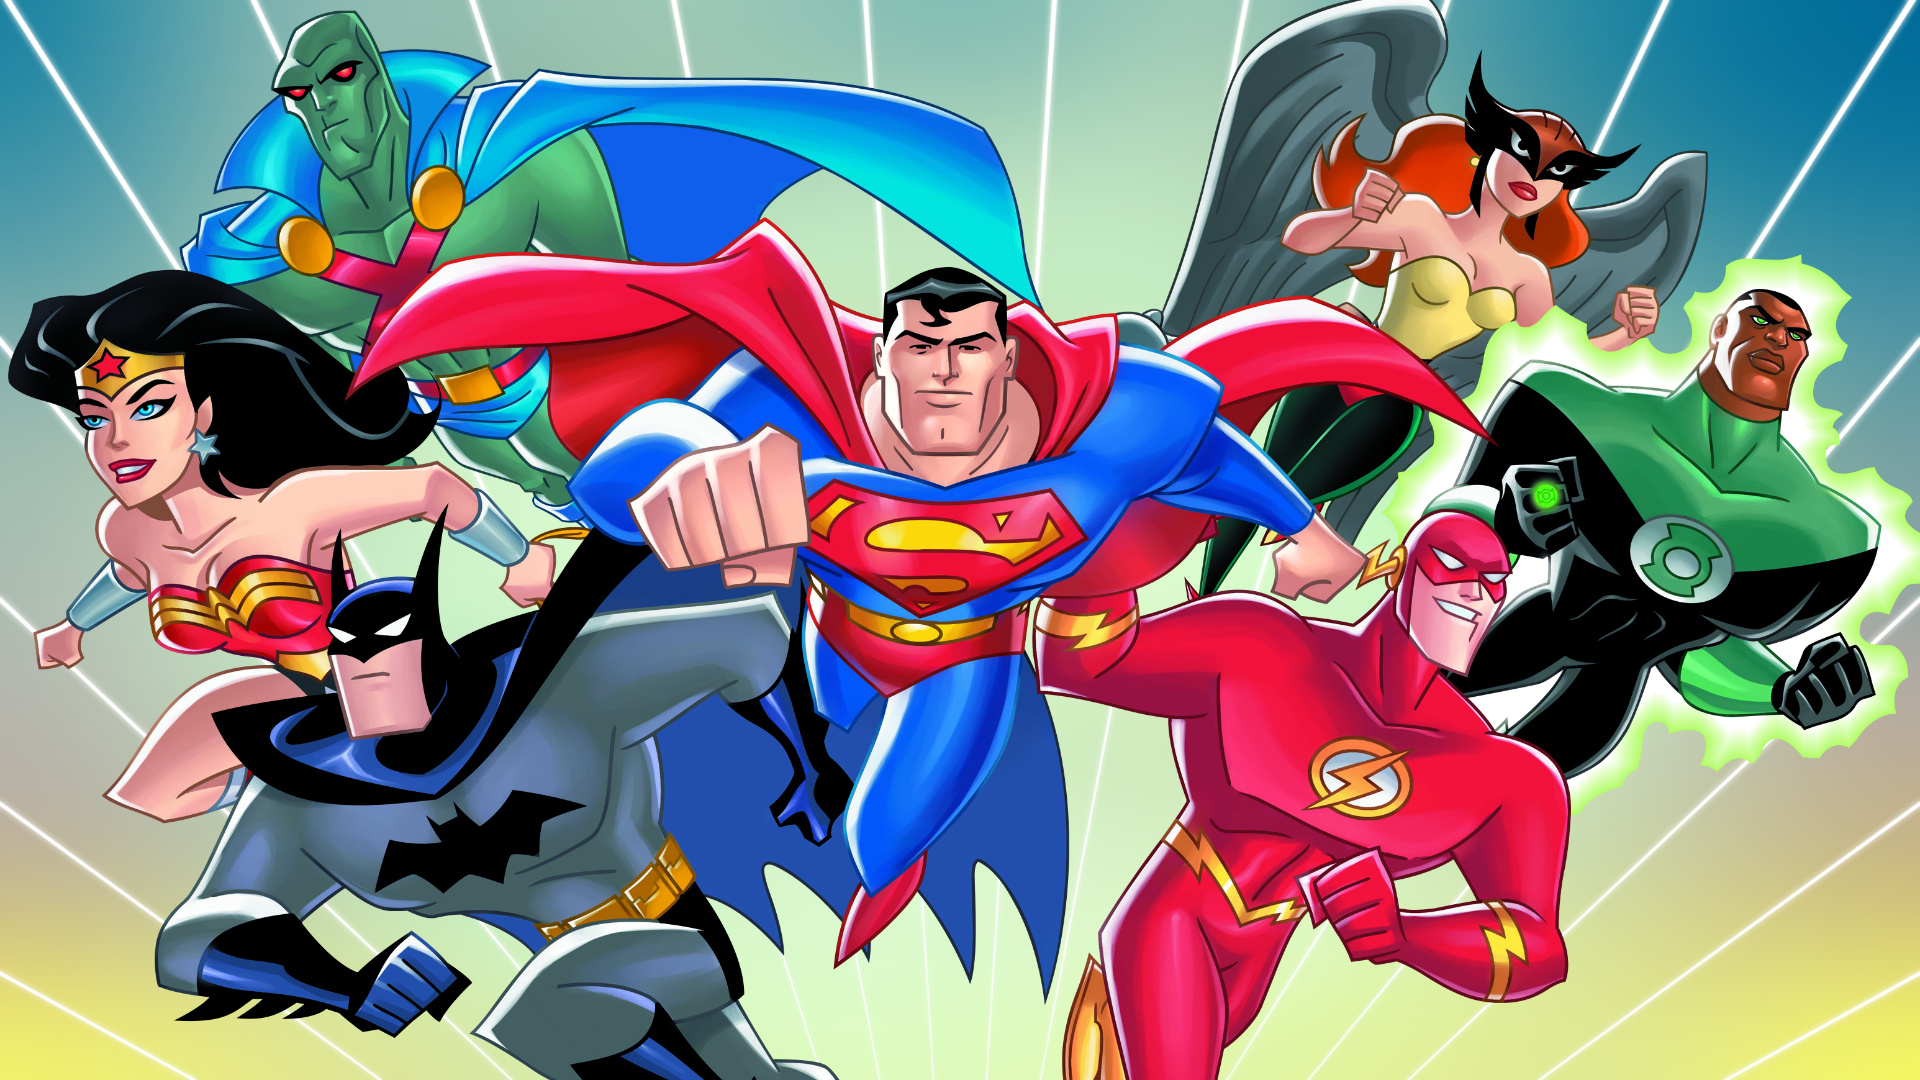 Justice League (TV Series 2001 - 2006)